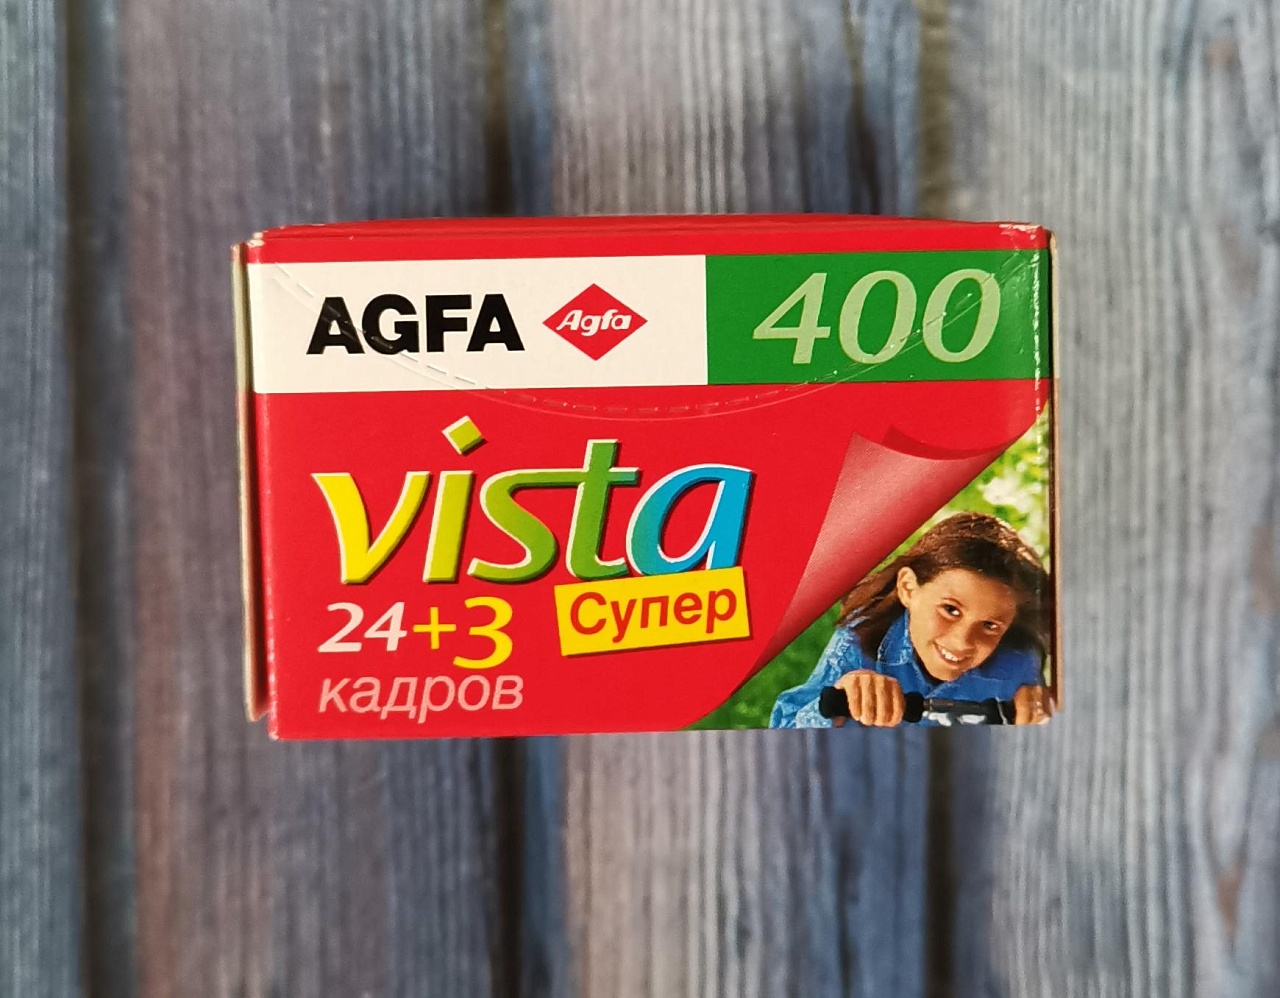 Agfa Vista 400/24+3 Эксклюзив Wonderfoto фото №2